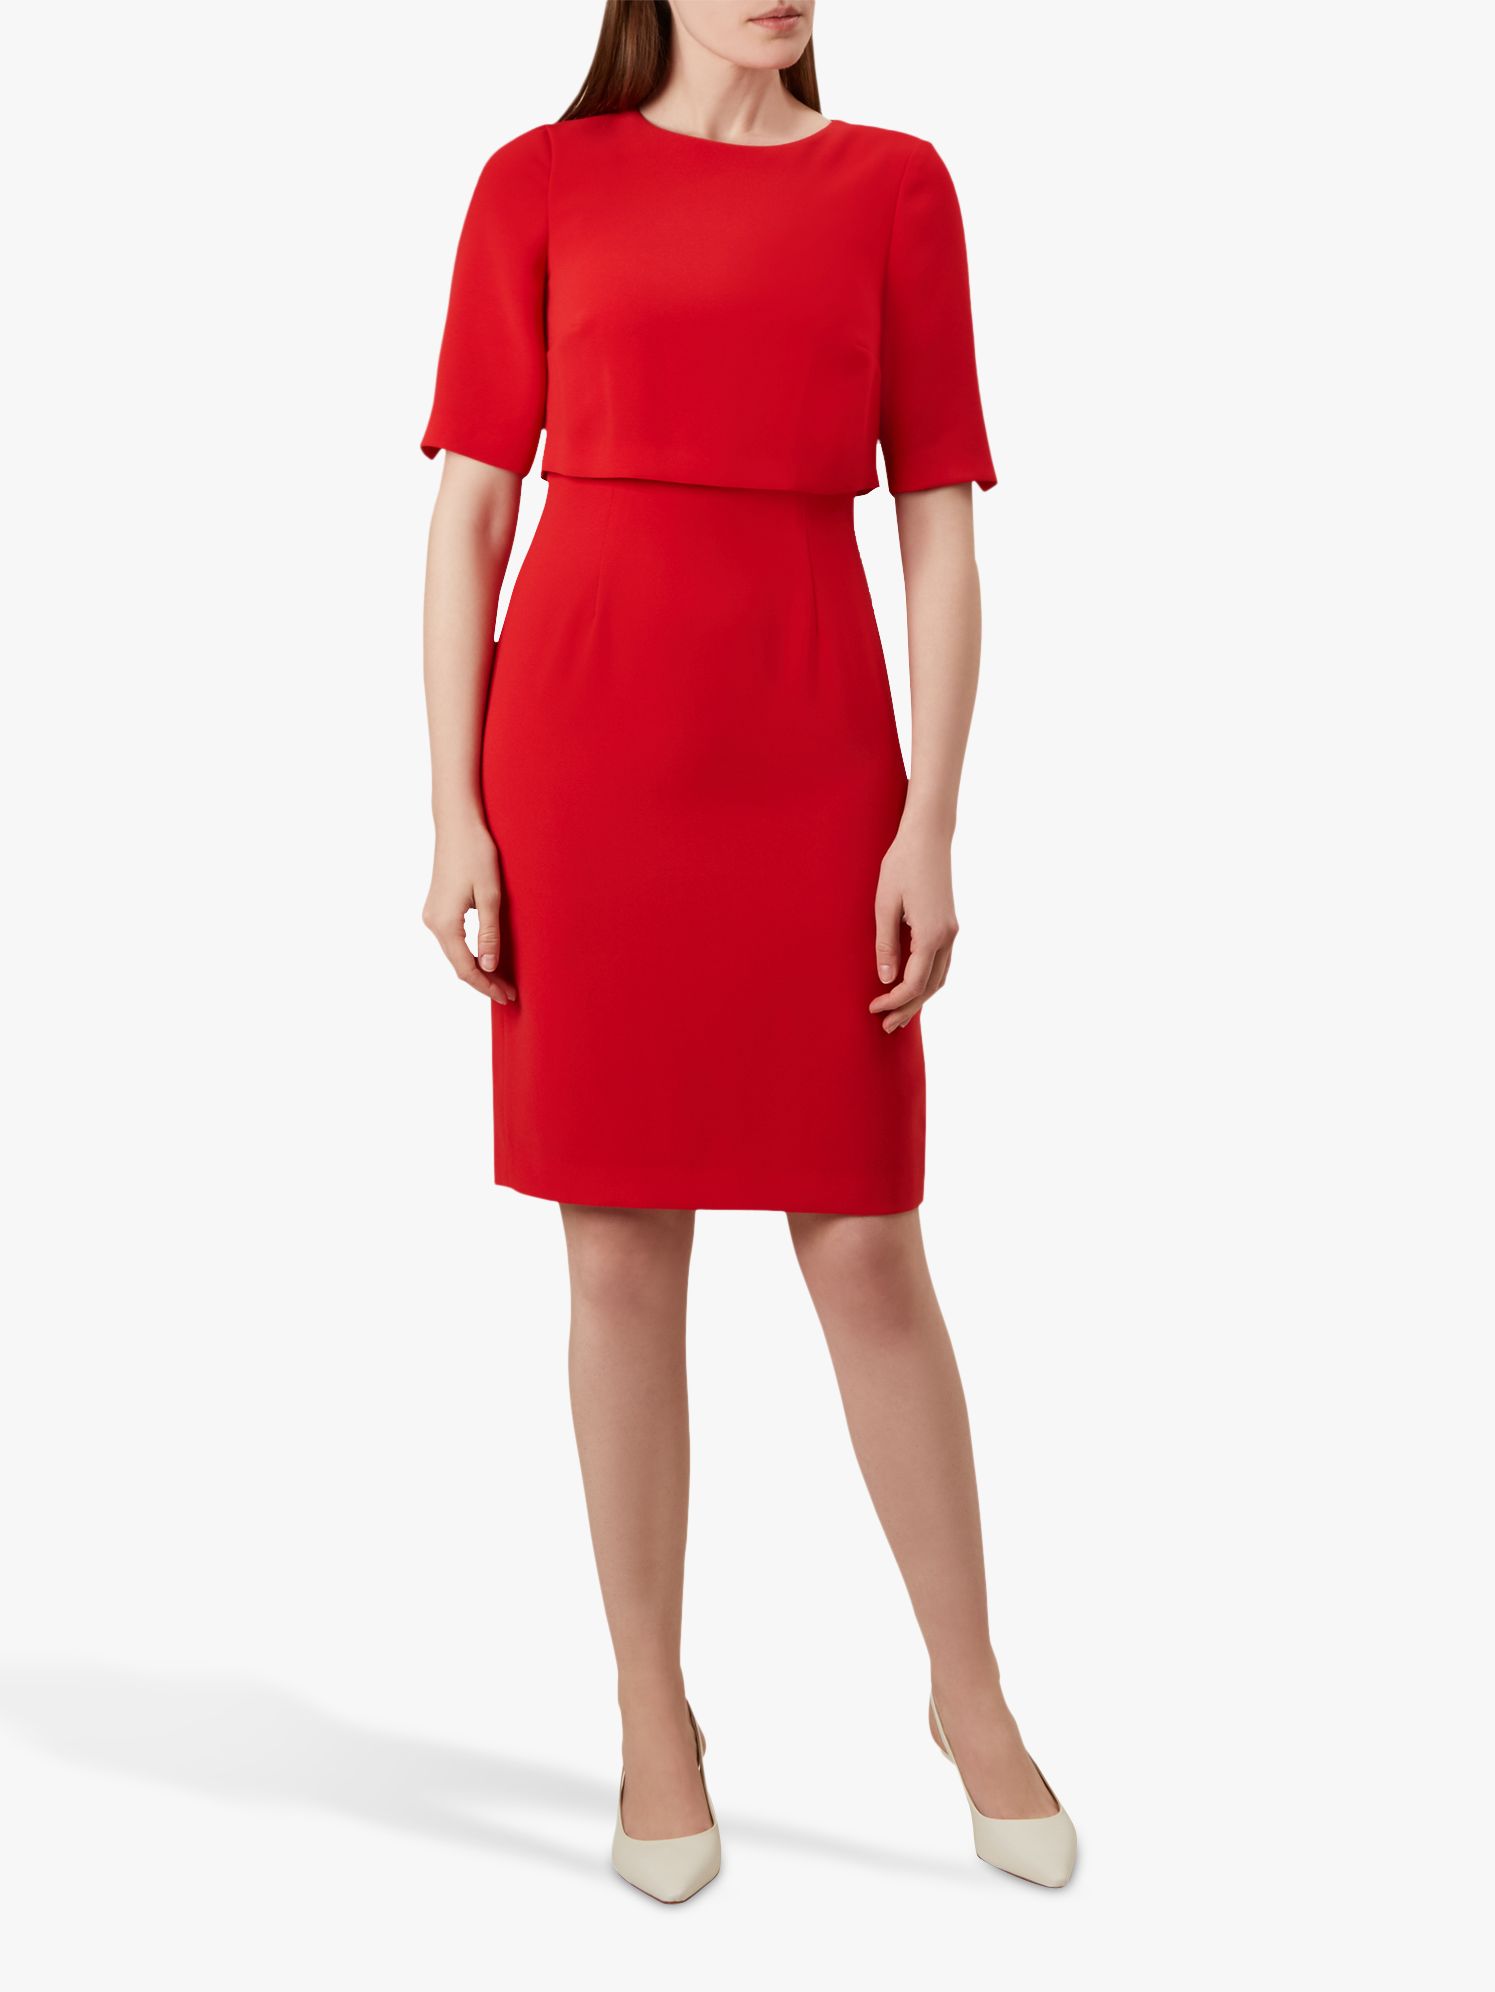 Hobbs Red Dress Clearance, 50% OFF | www.simbolics.cat